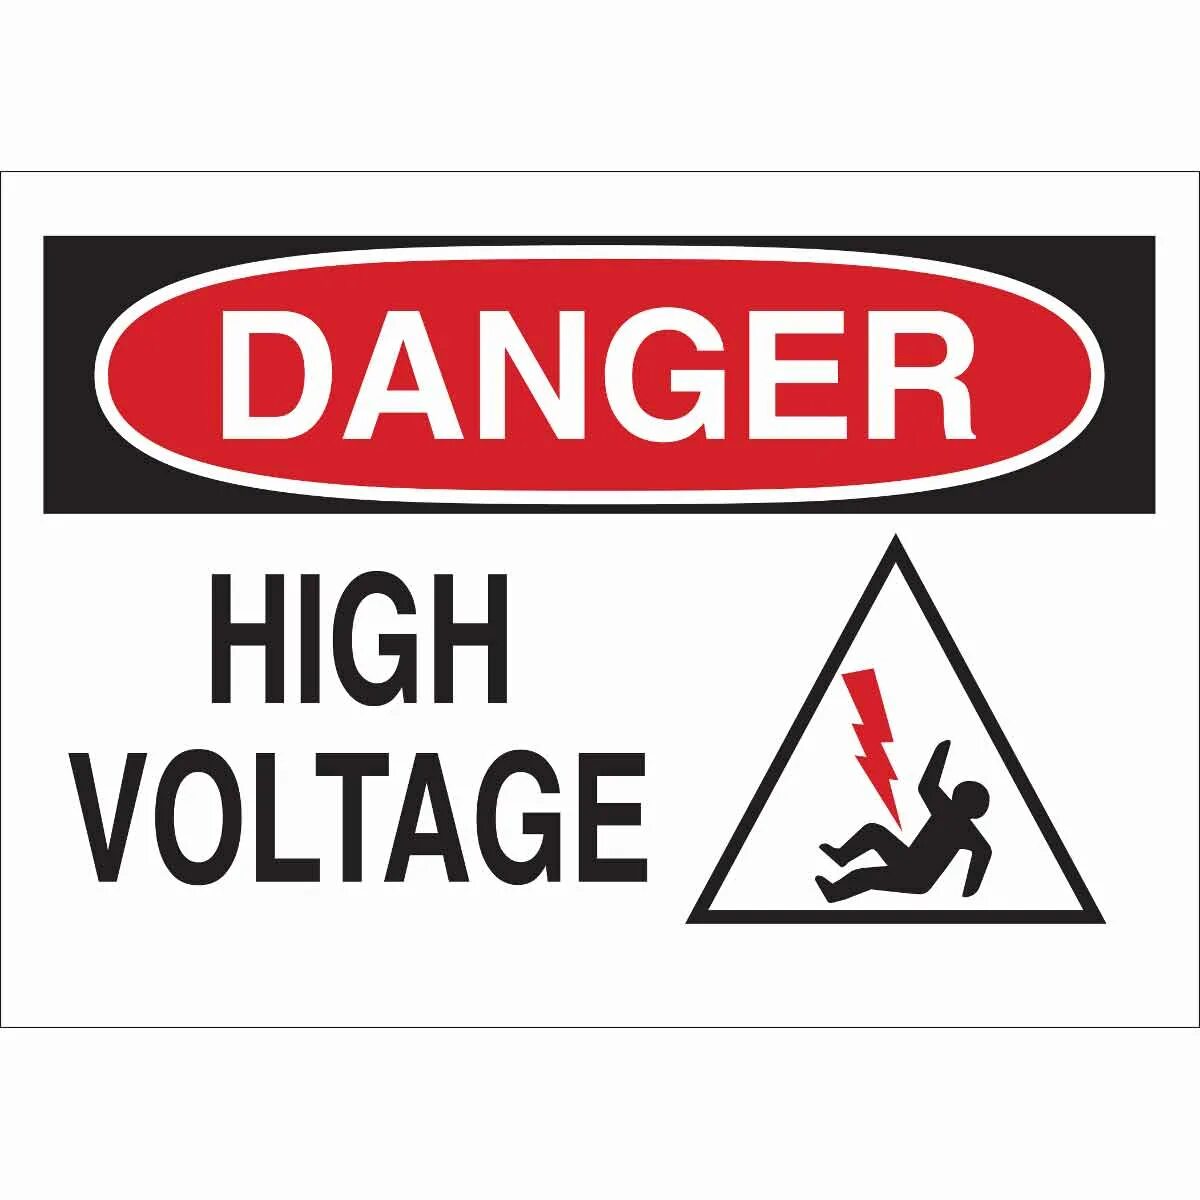 Знак Danger High Voltage. Денгер Денгер Хай Вольтаж. Наклейка Danger High Voltage Corsair. Attention High Voltage. High attention